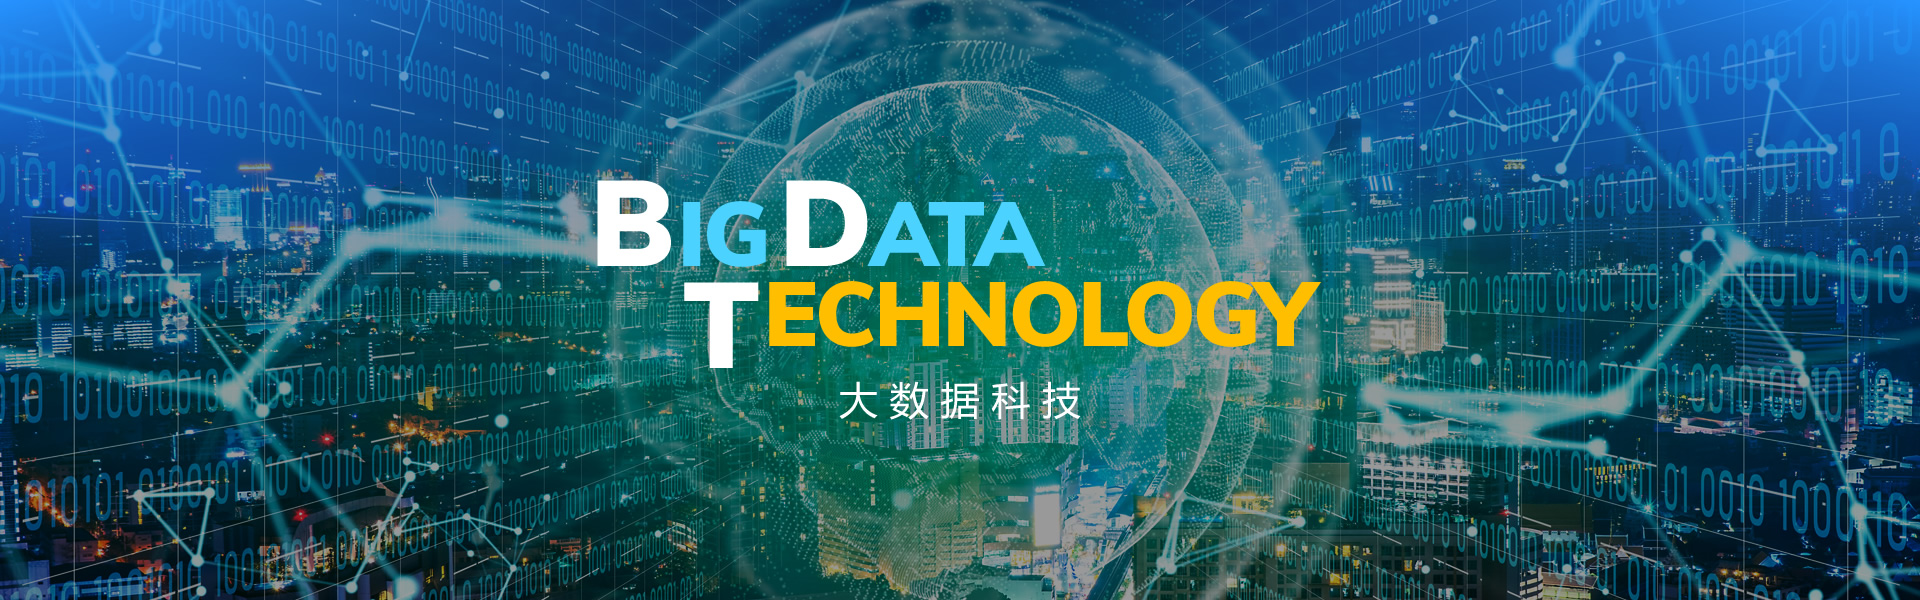 MSc Big Data Technology